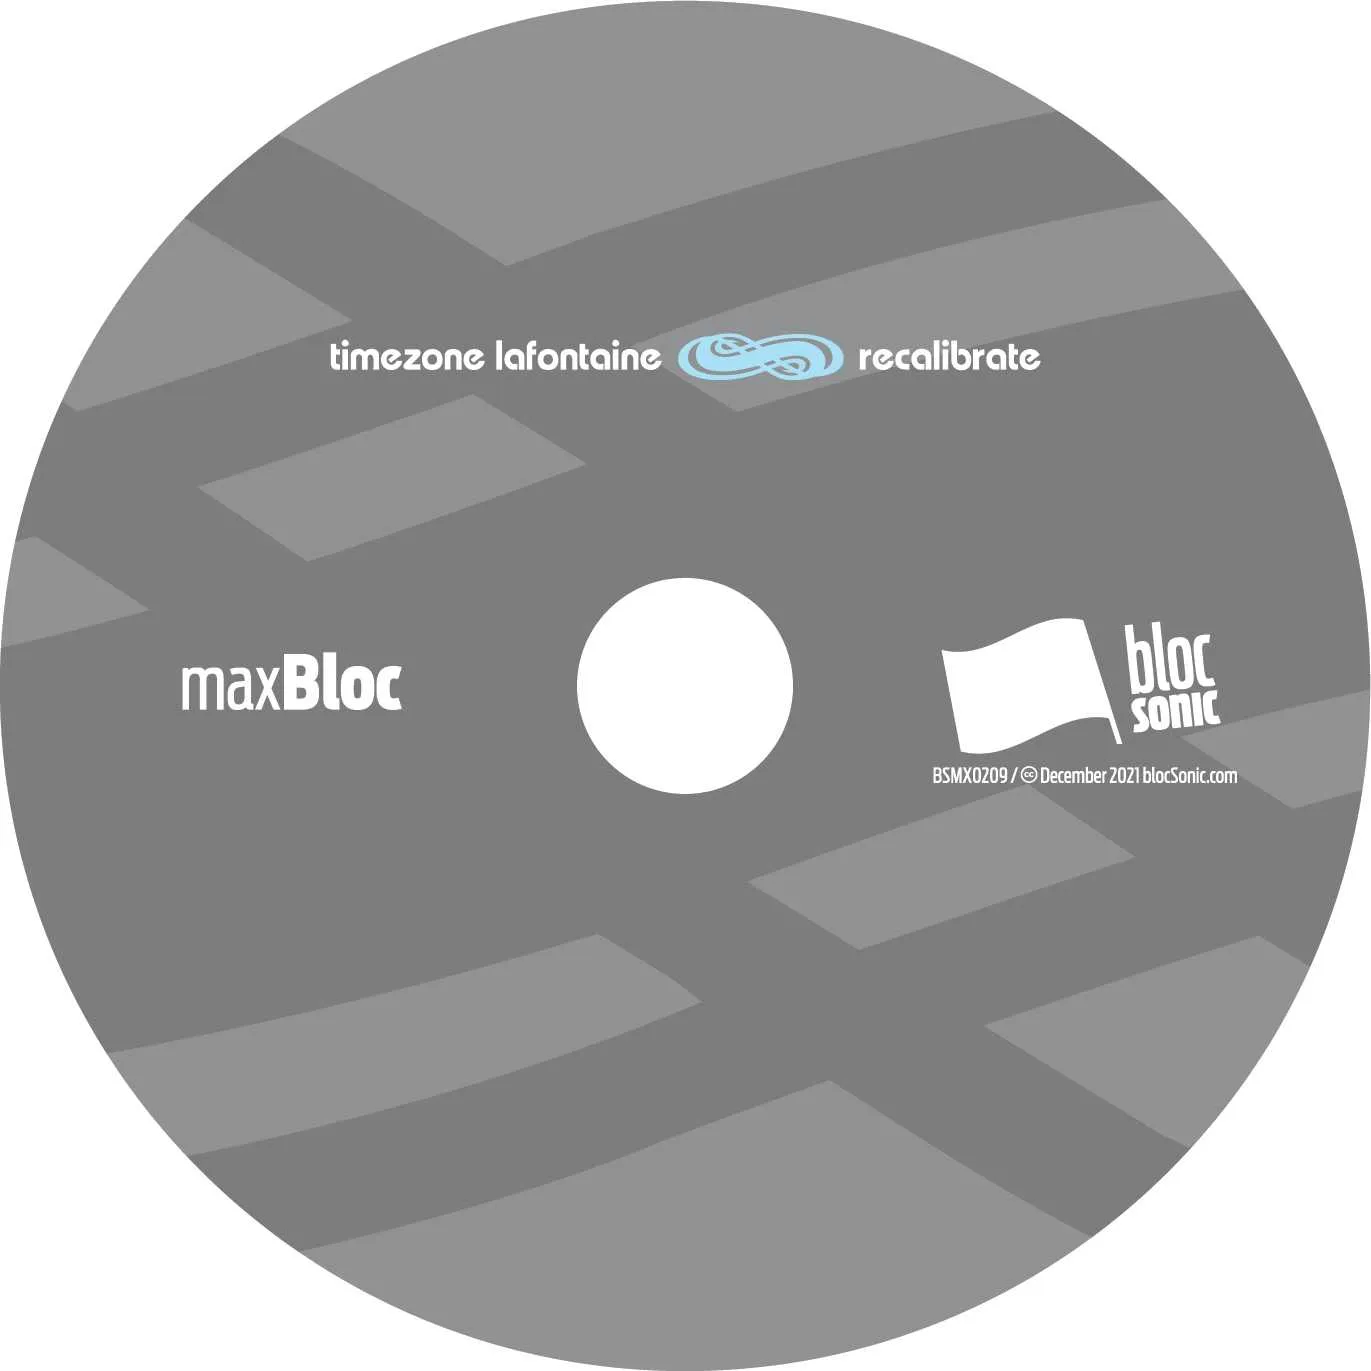 Album disc for “Recalibrate” by Timezone Lafontaine